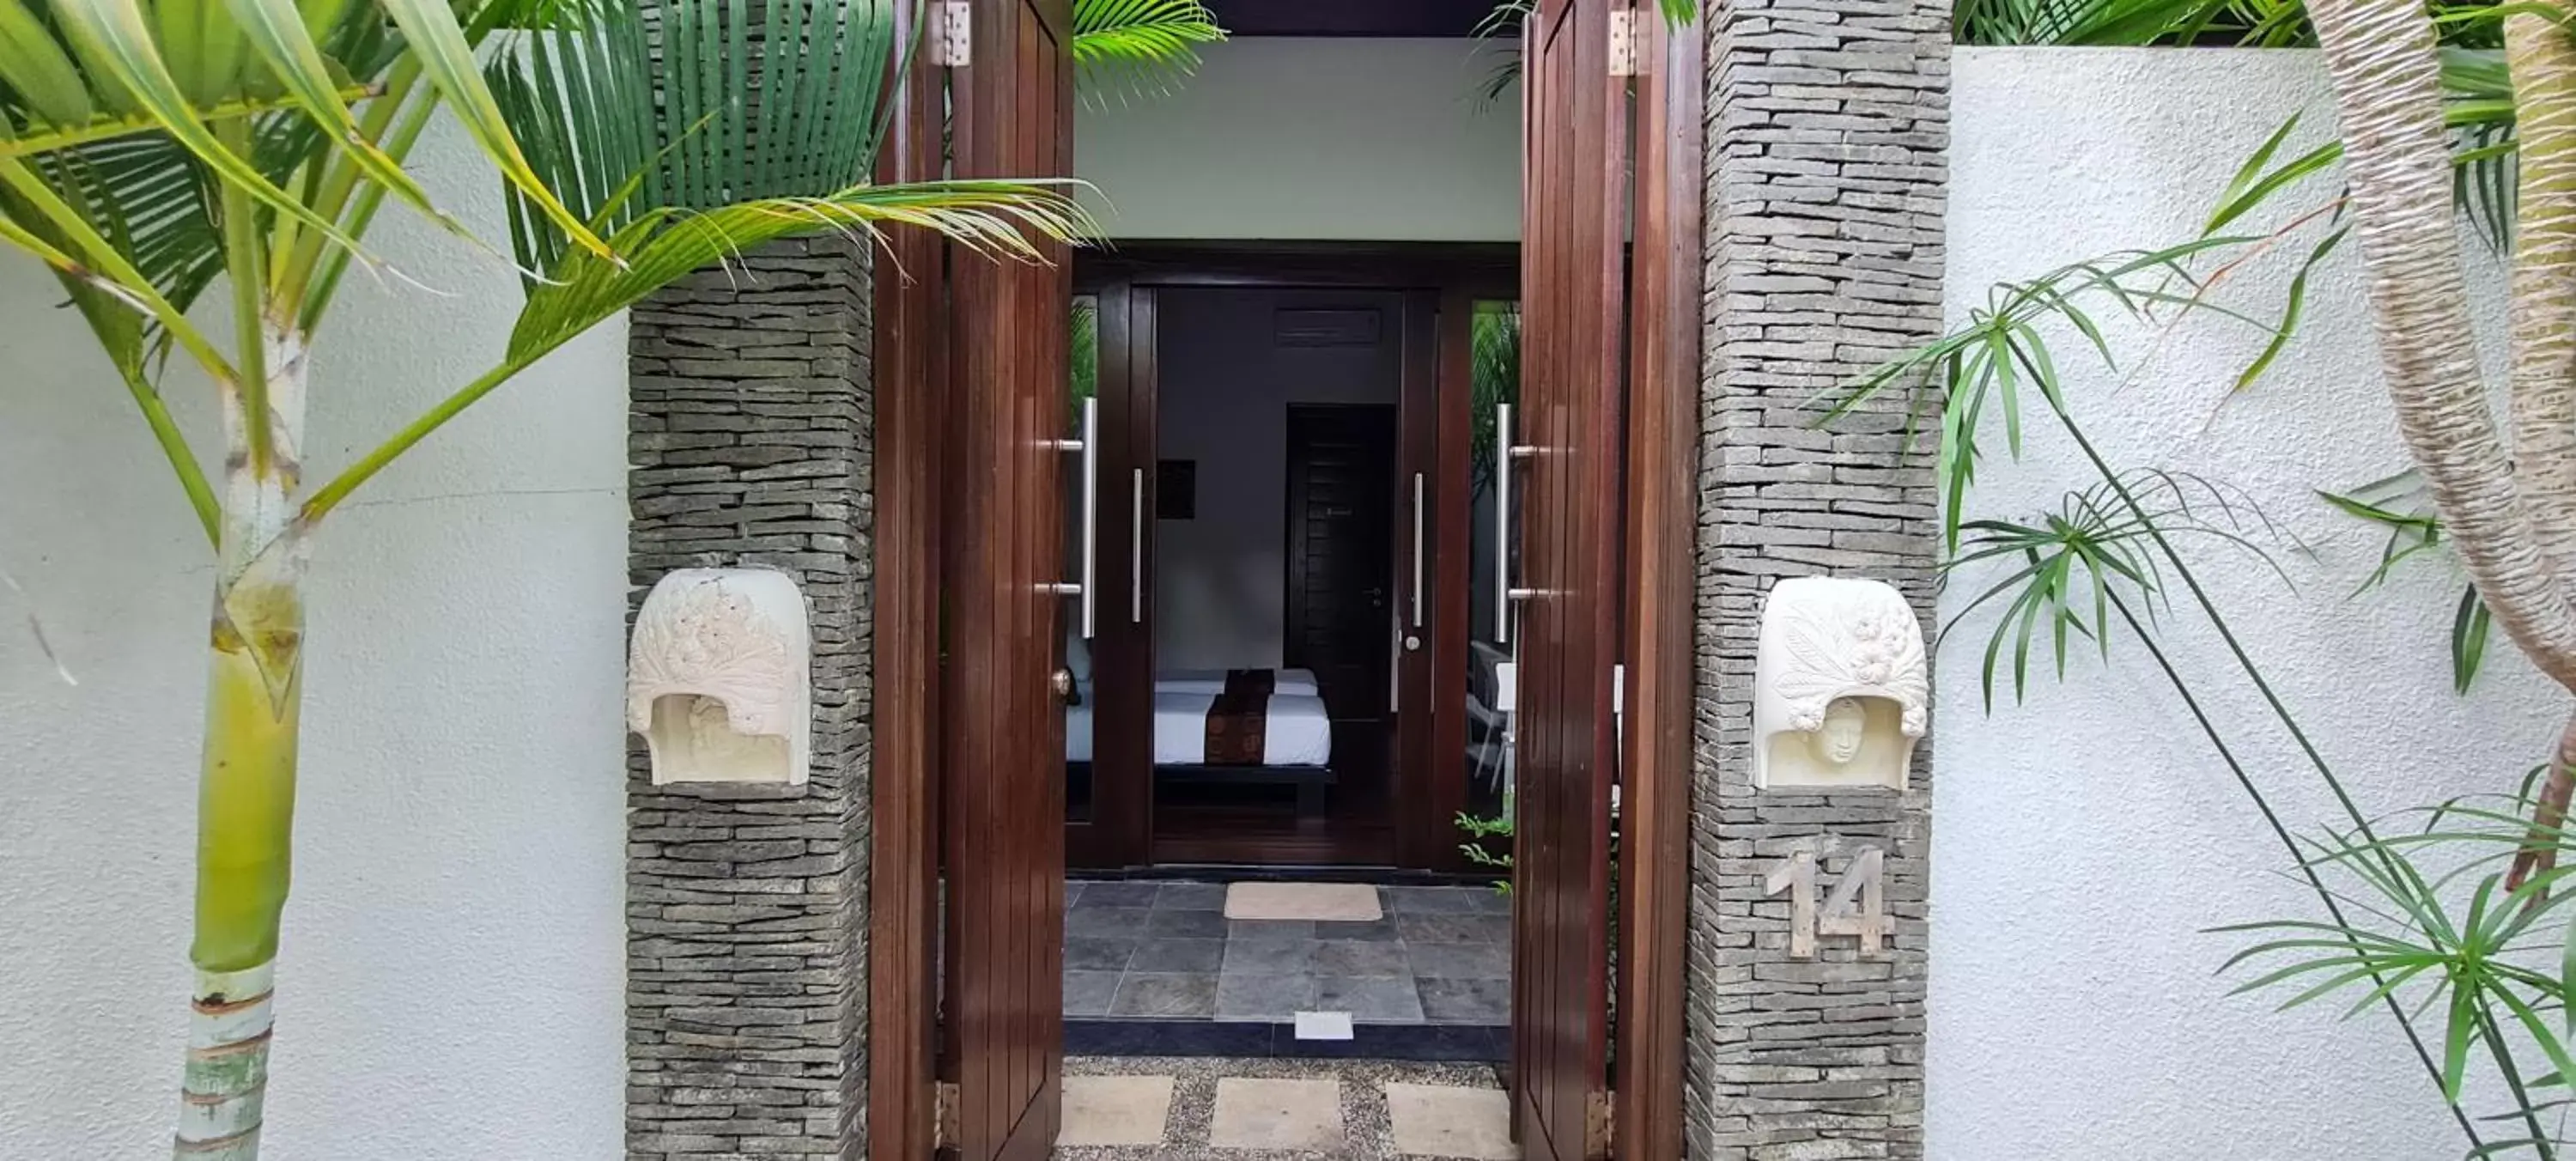 Facade/Entrance in The Trawangan Resort